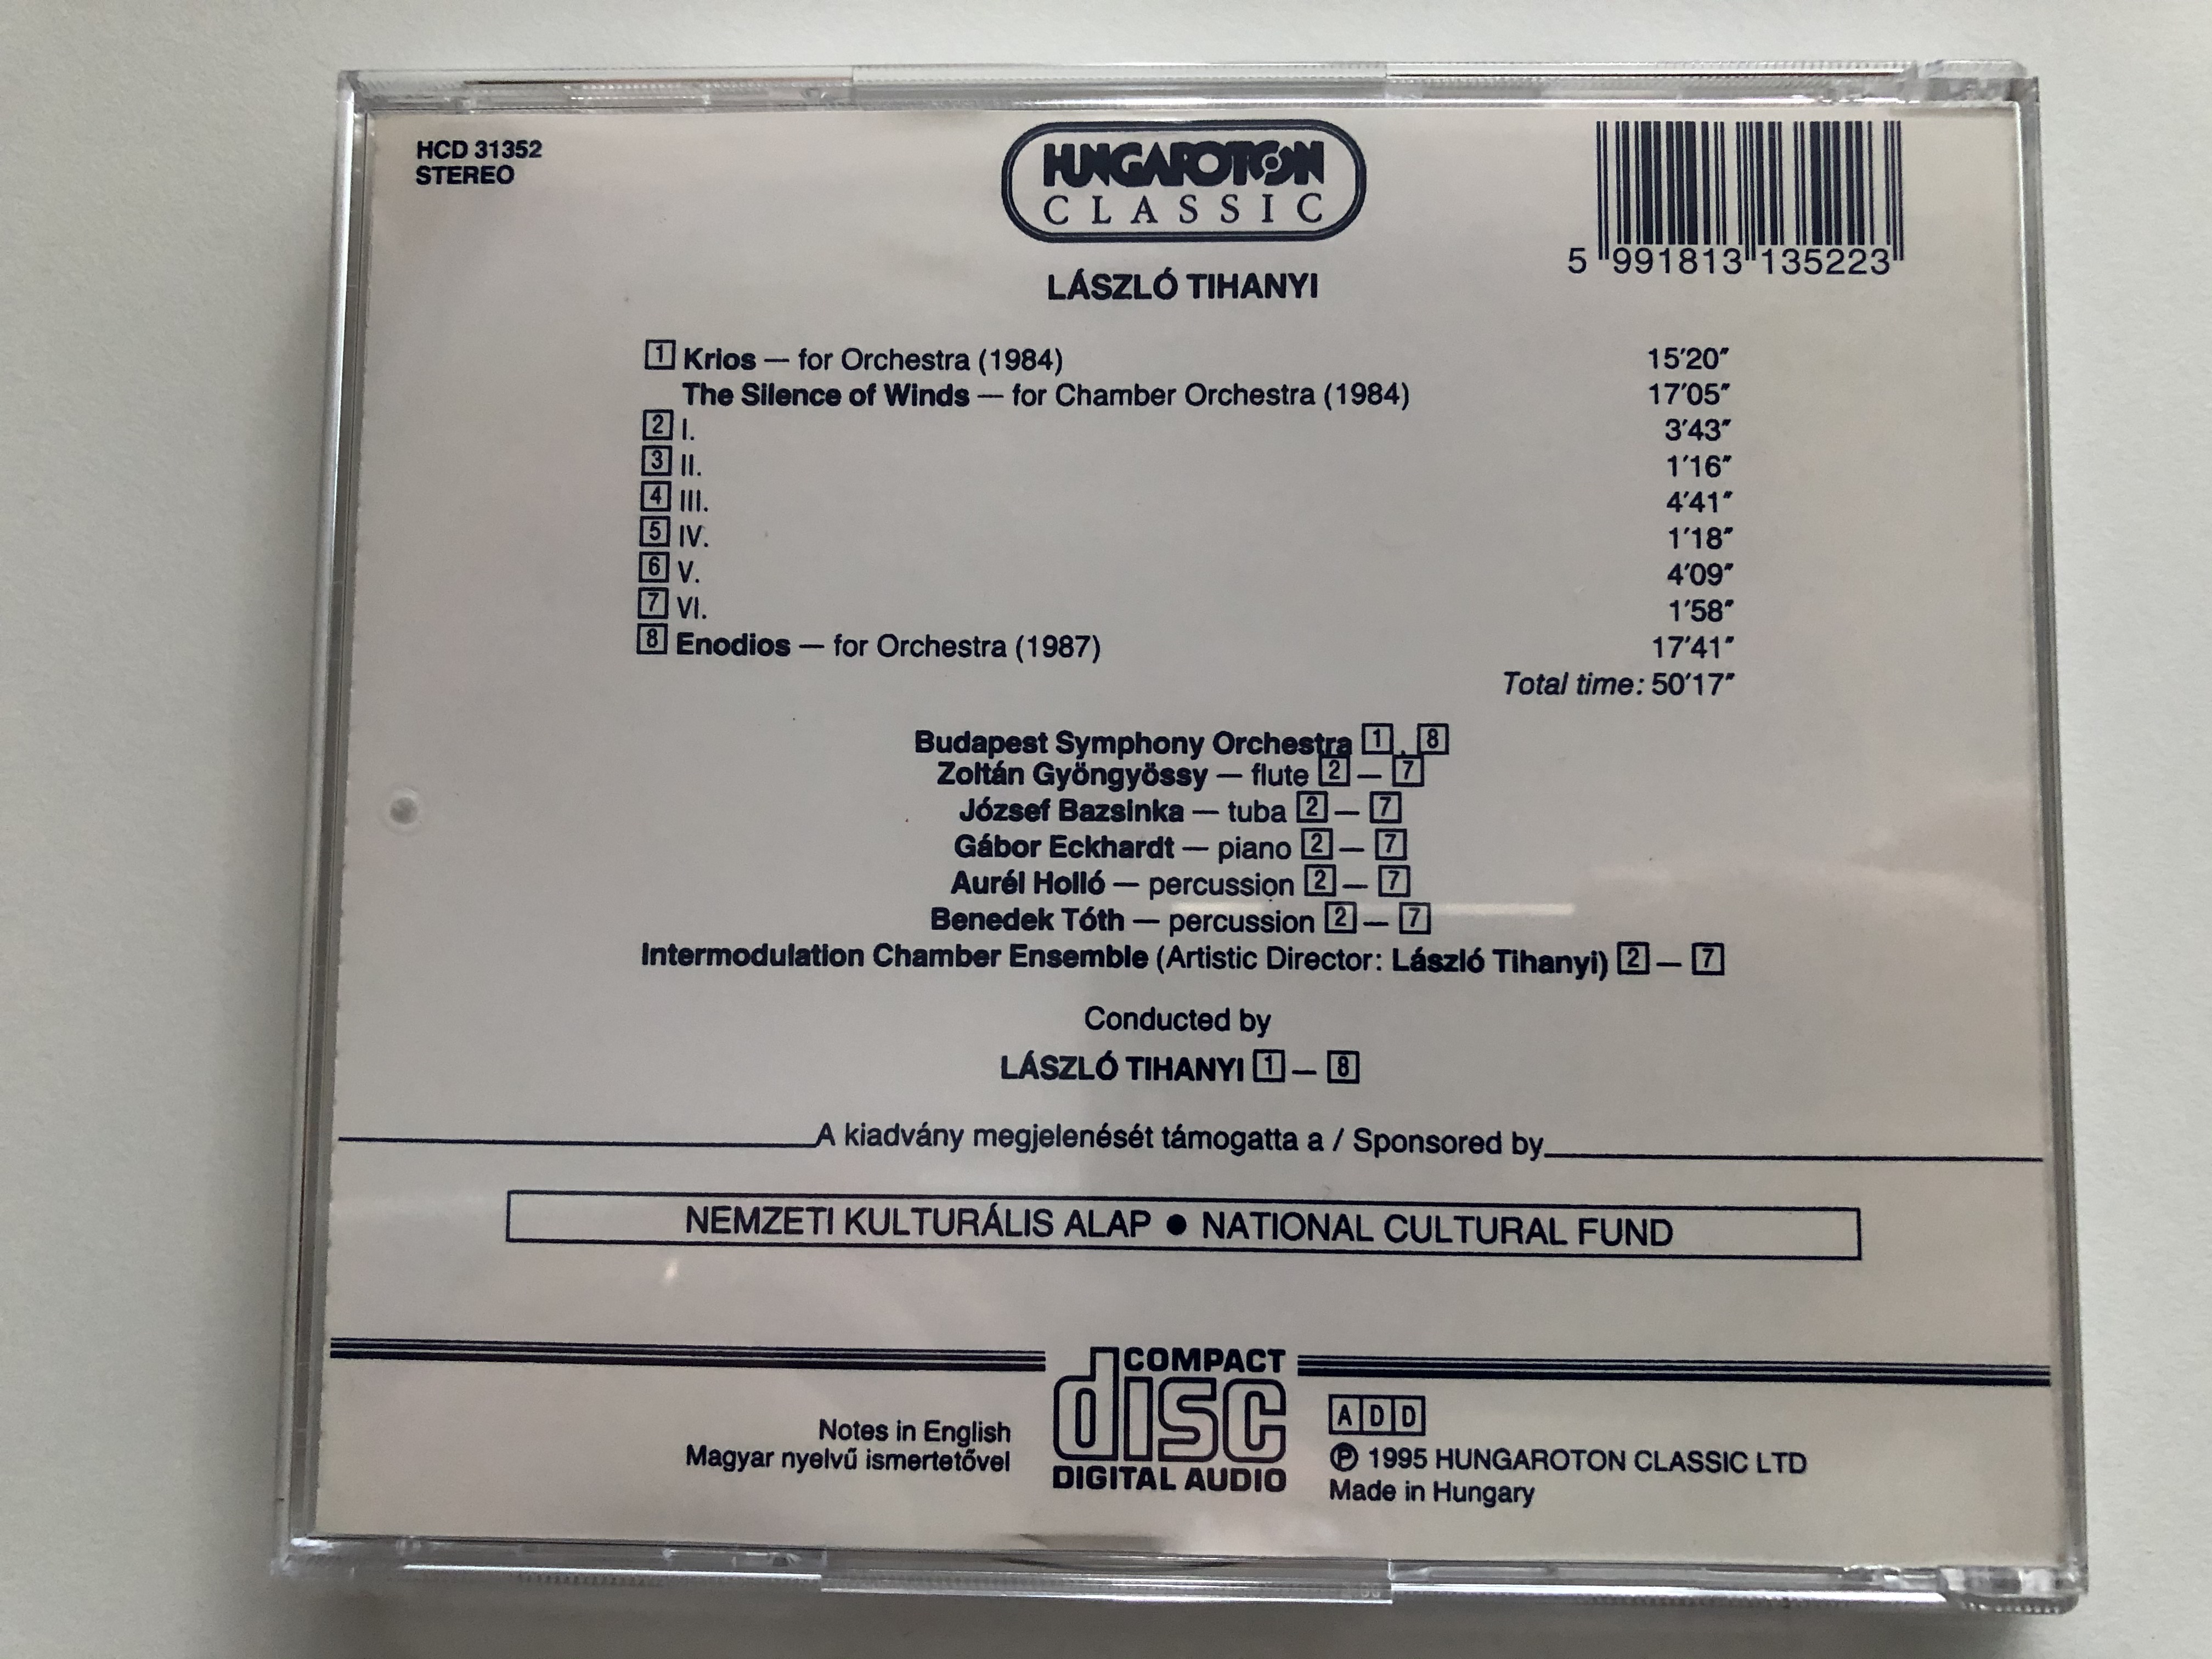 l-szl-tihanyi-krios-enodios-the-silence-of-winds-hungaroton-classic-audio-cd-1995-stereo-hcd-31352-7-.jpg